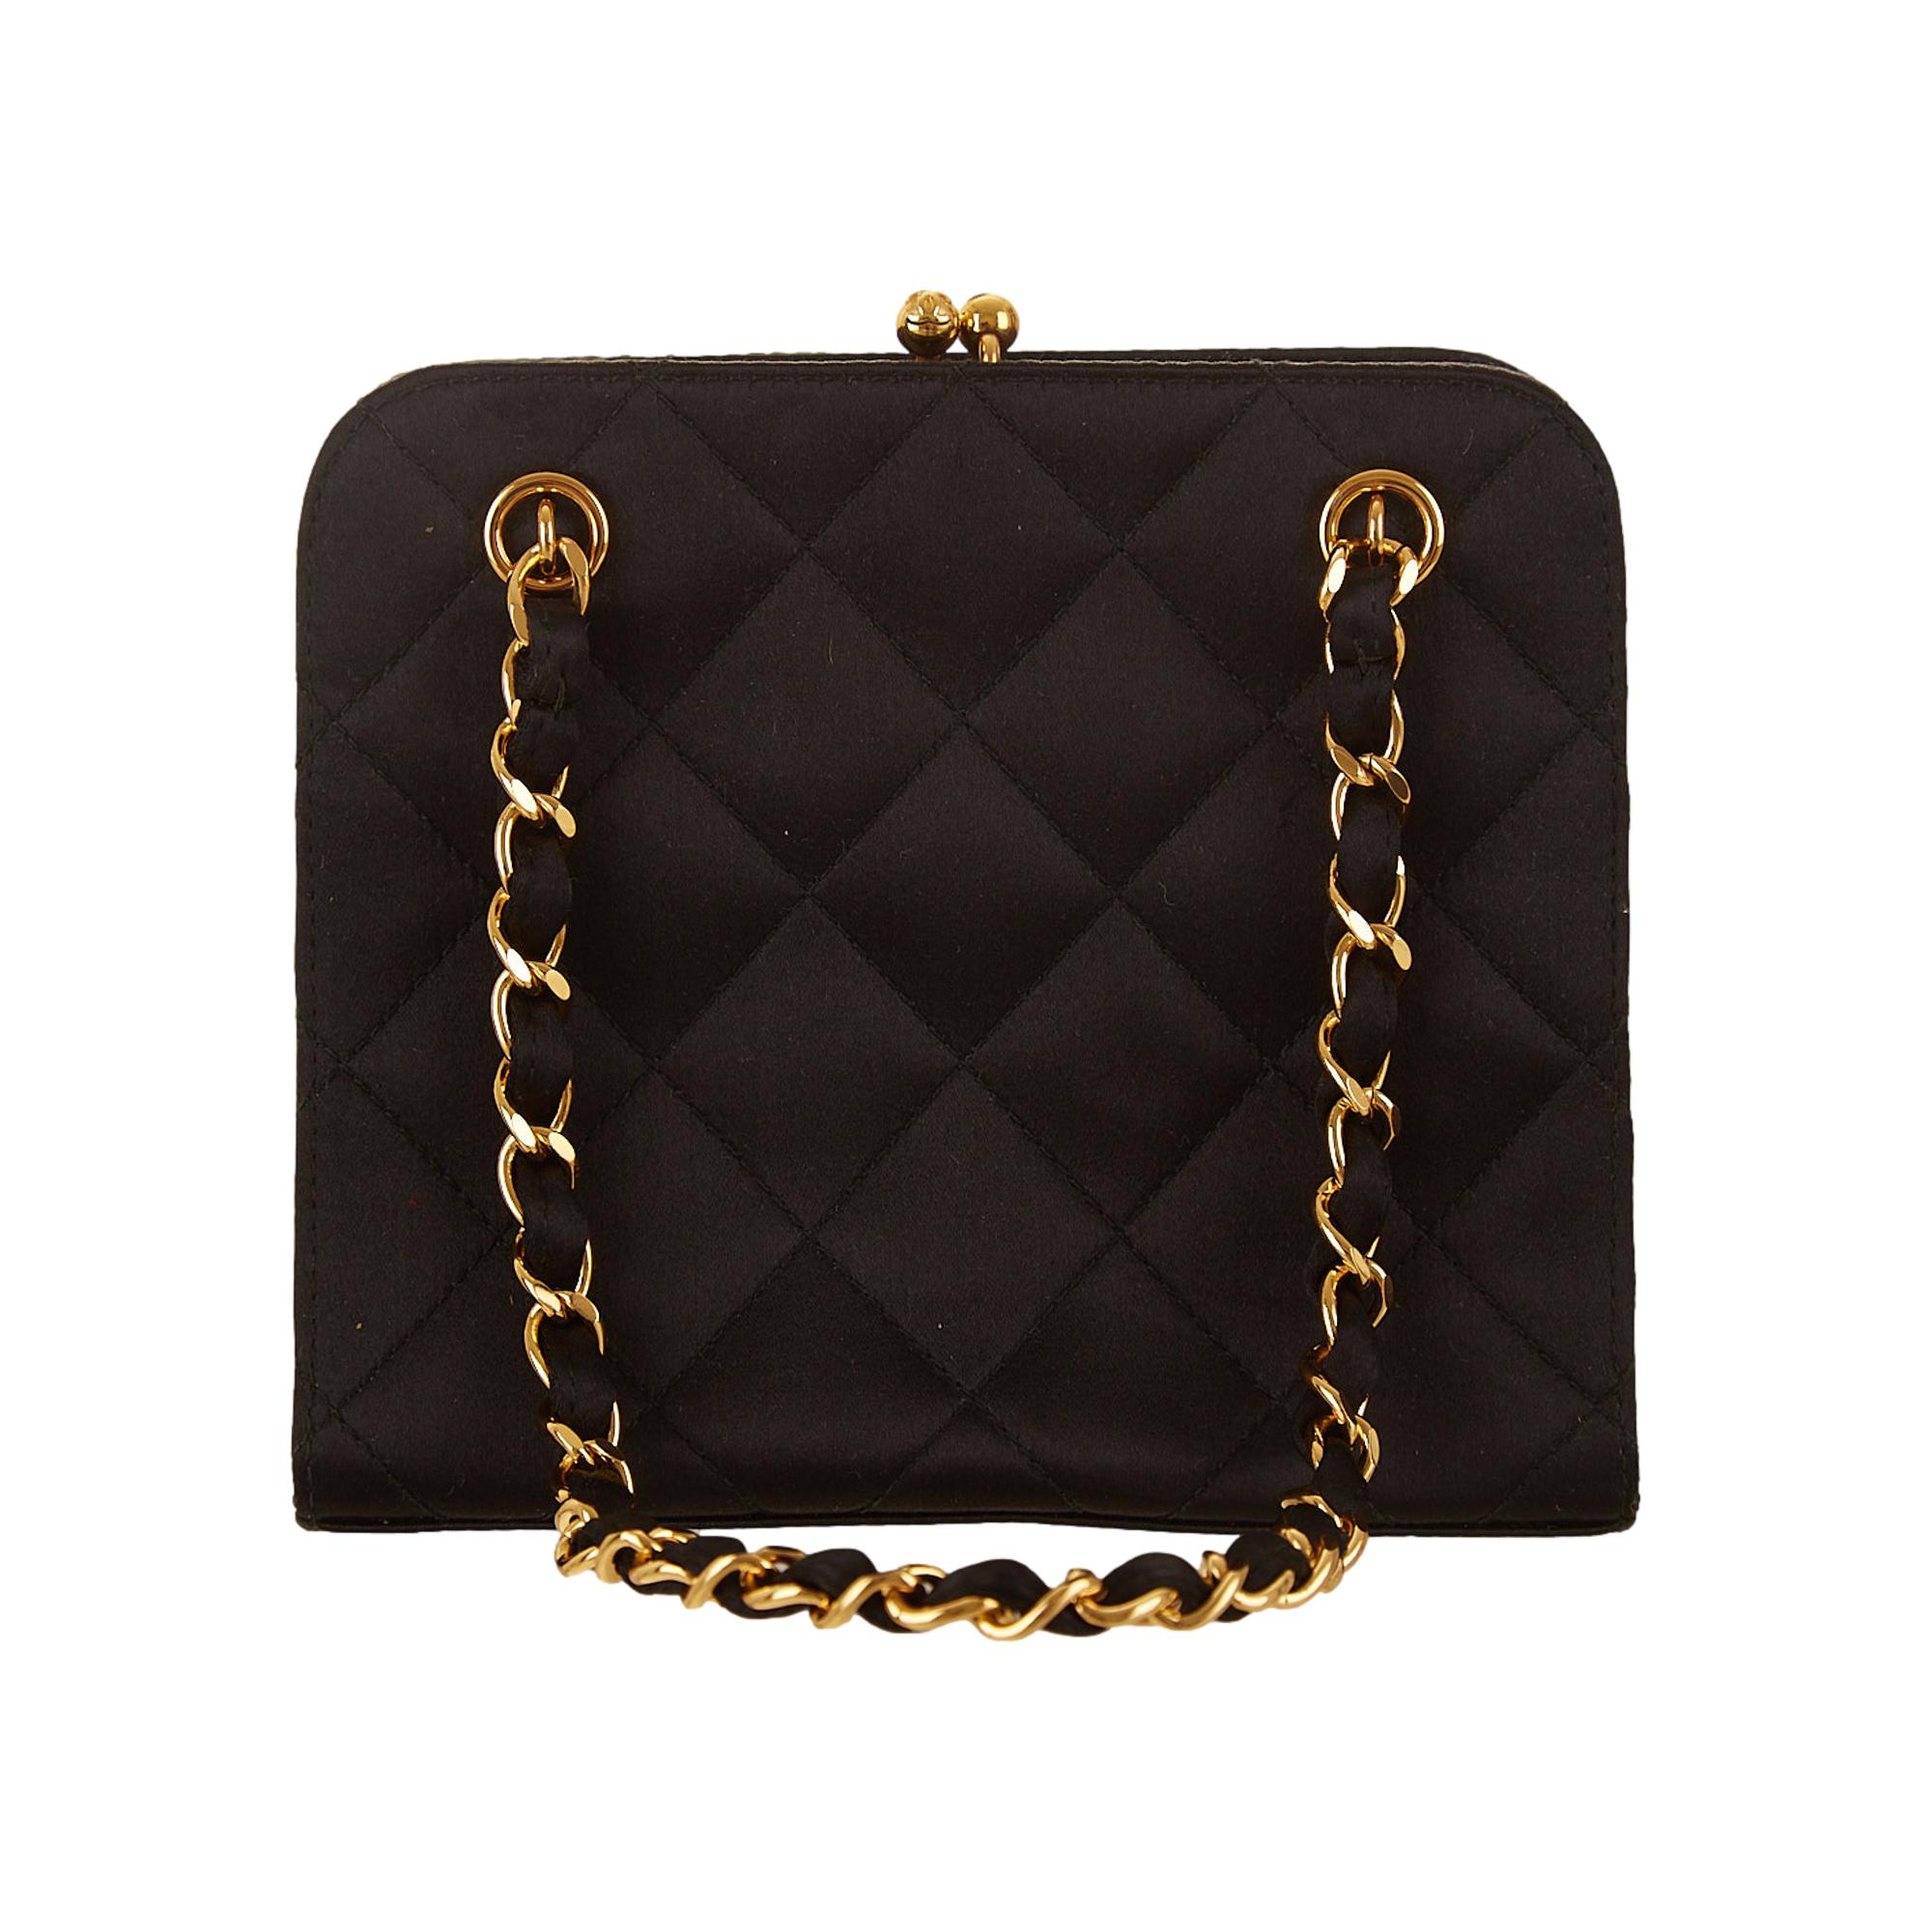 Chanel Black Quilted Satin Mini Kiss Lock Bag